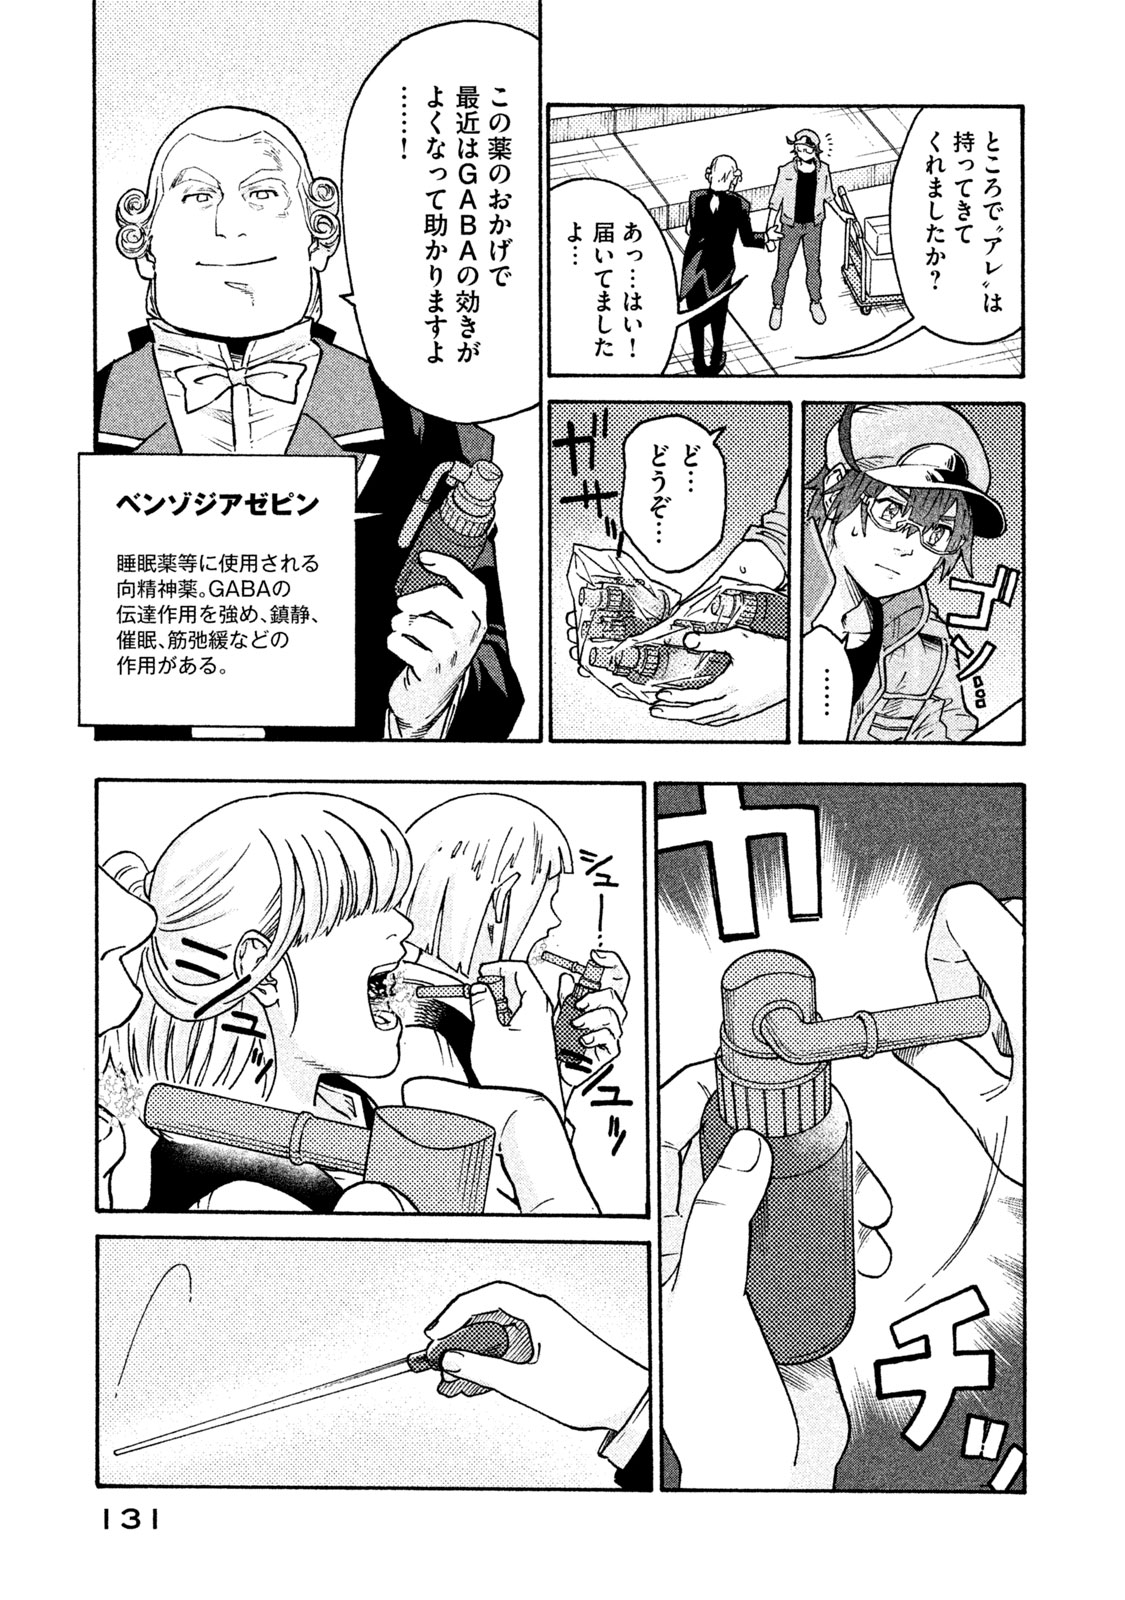 Hataraku Saibou BLACK - Chapter 31 - Page 7